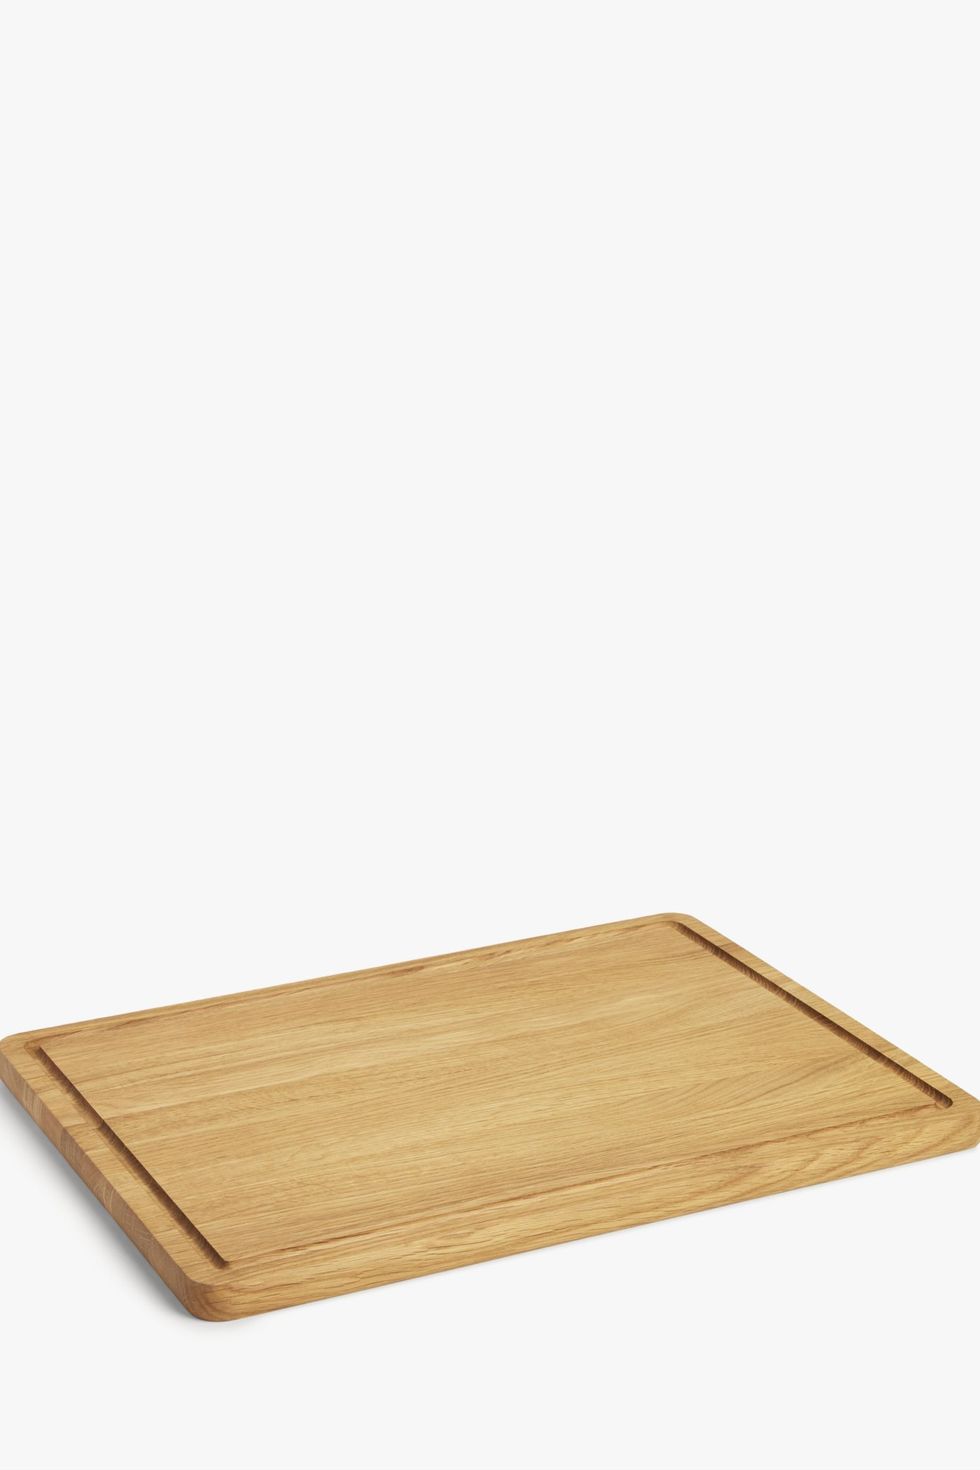 Large Oak-Wood Chopping Board 